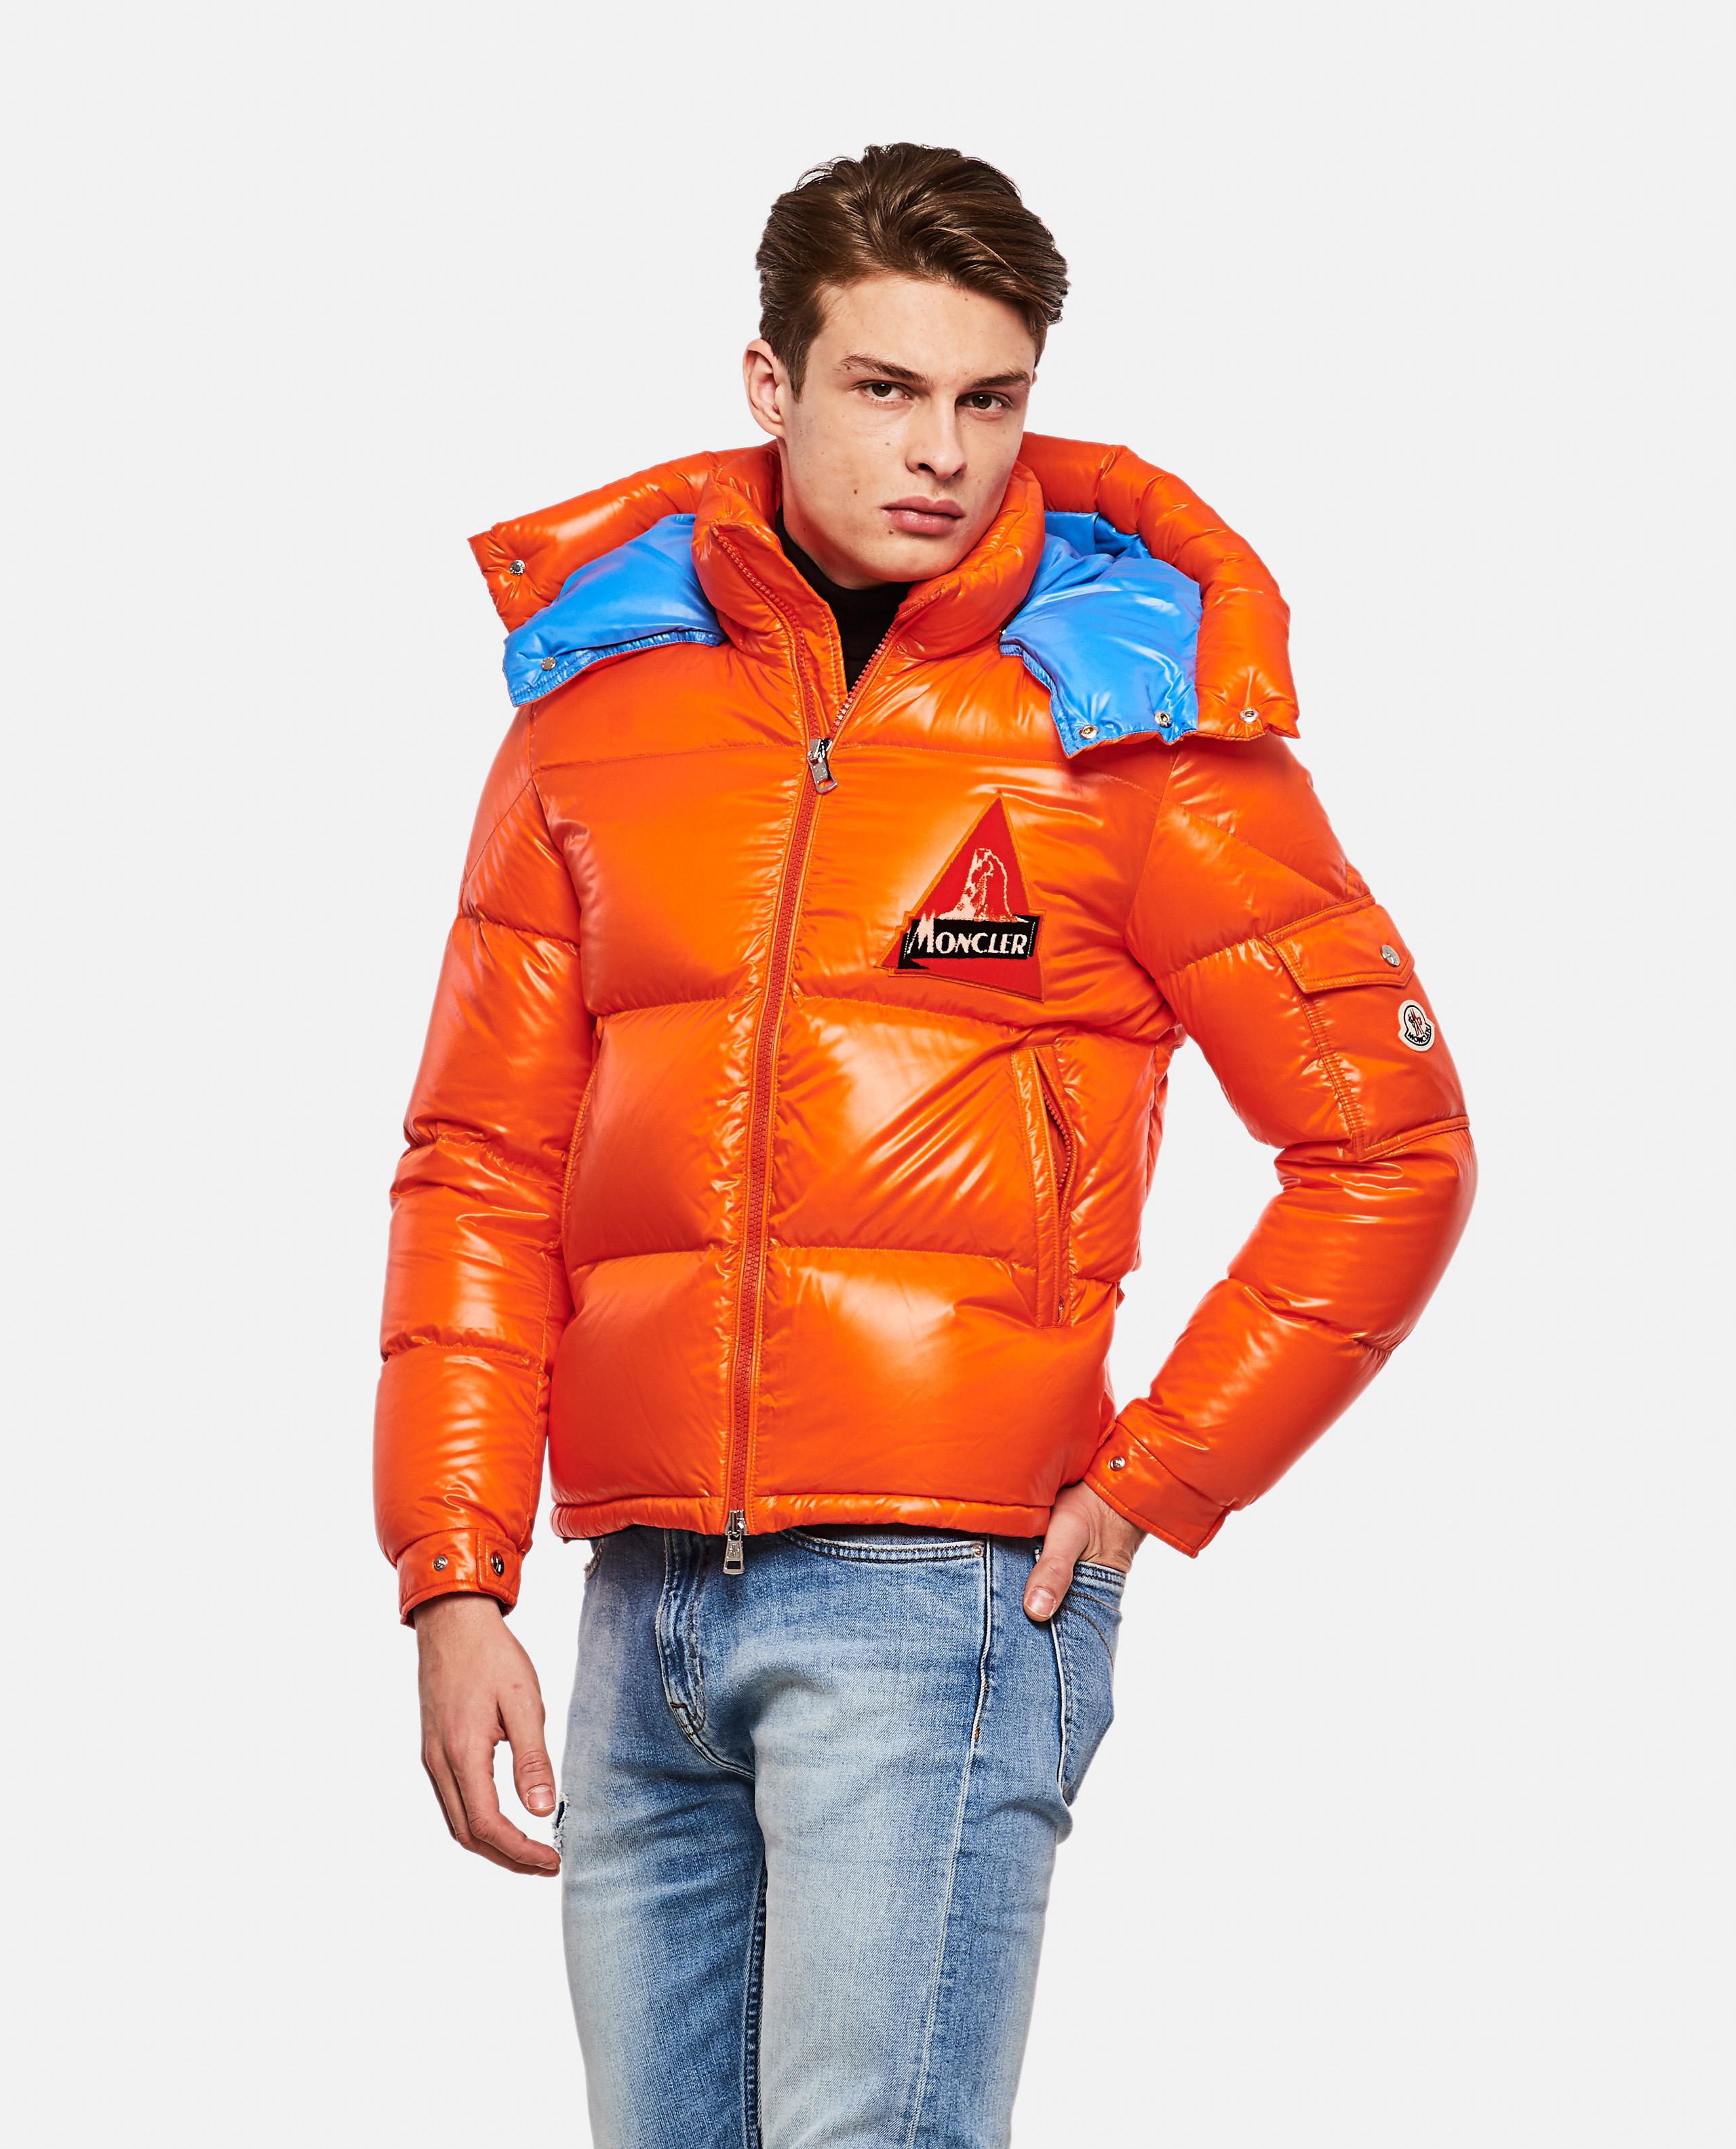 Moncler Synthetic Wilson Jacket in Orange for Men - Lyst